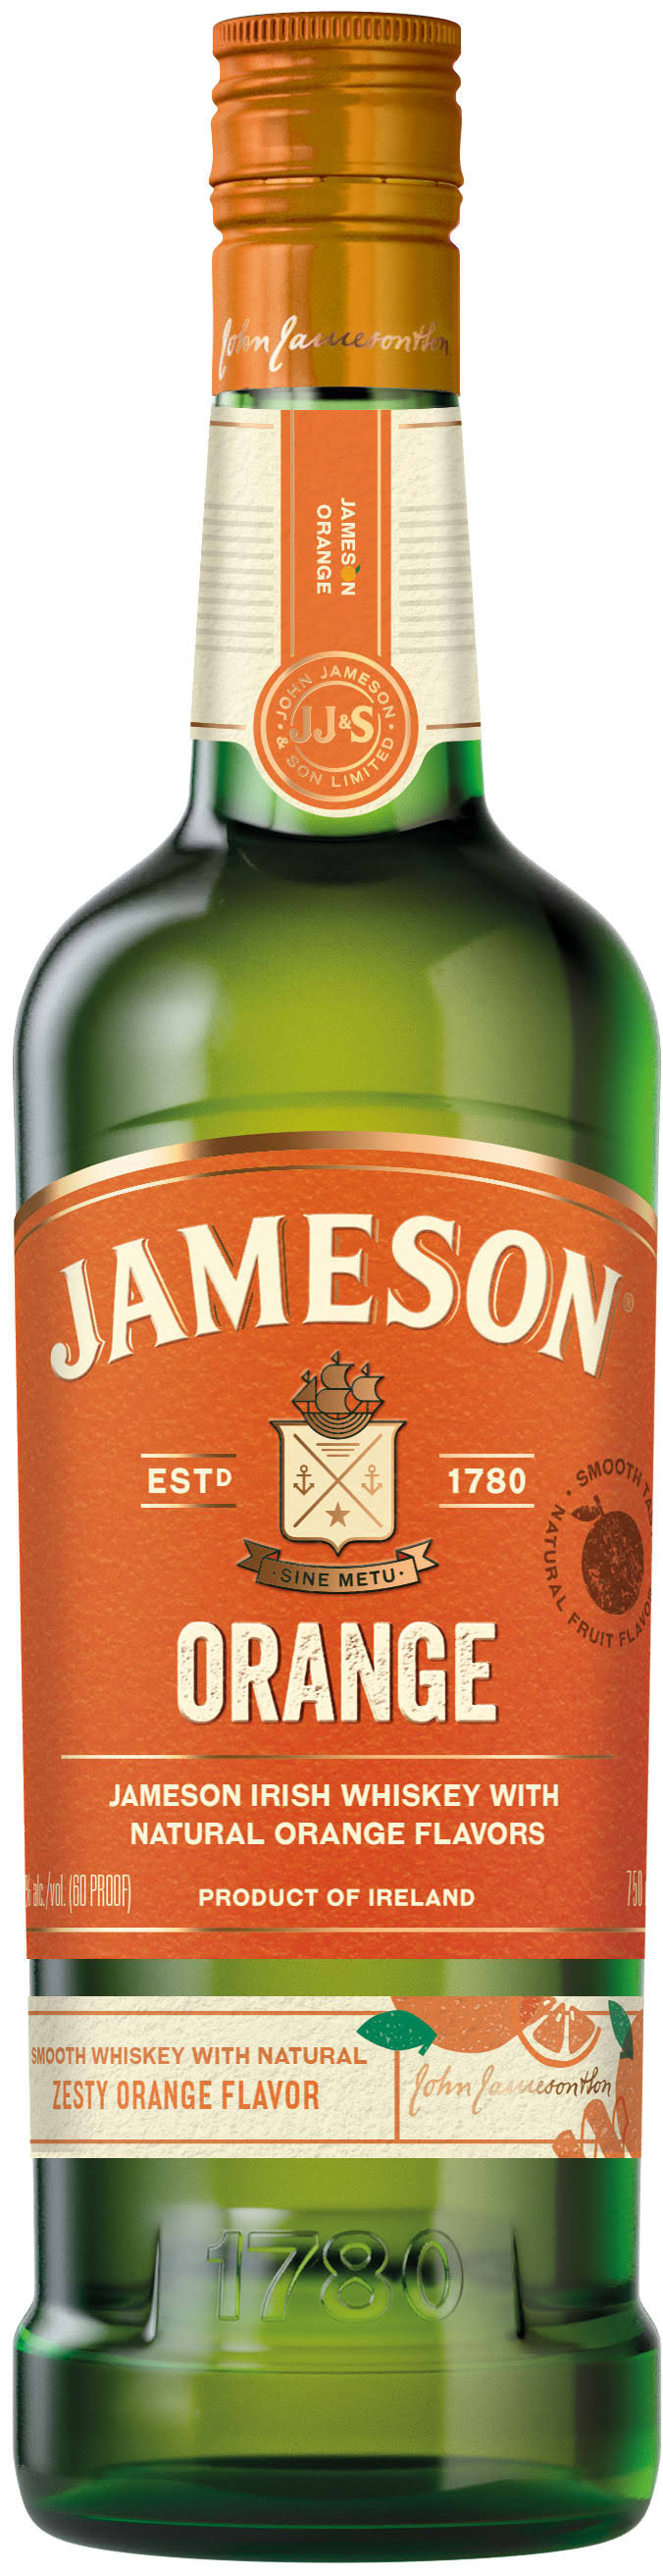 Jameson Orange Whiskey 750ml Bottle